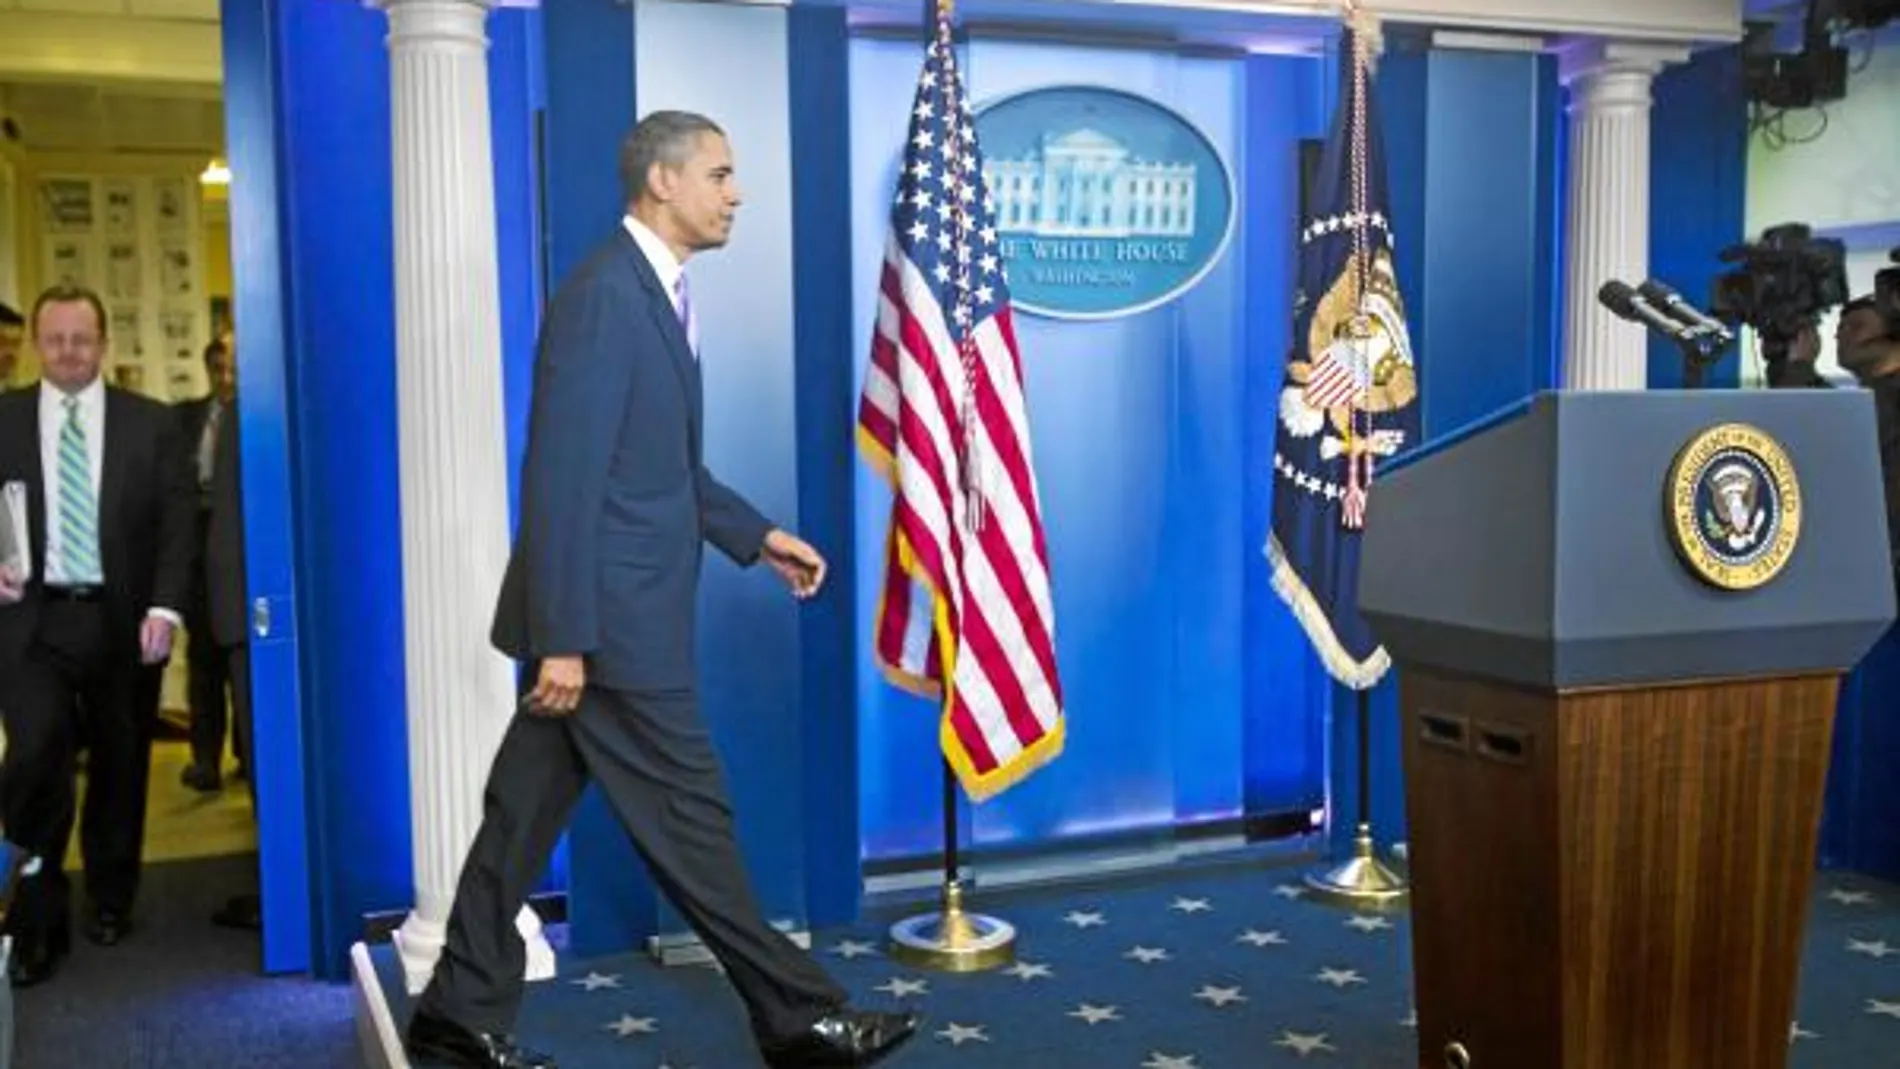 Obama llega a la sala de prensa de la Casa Blanca